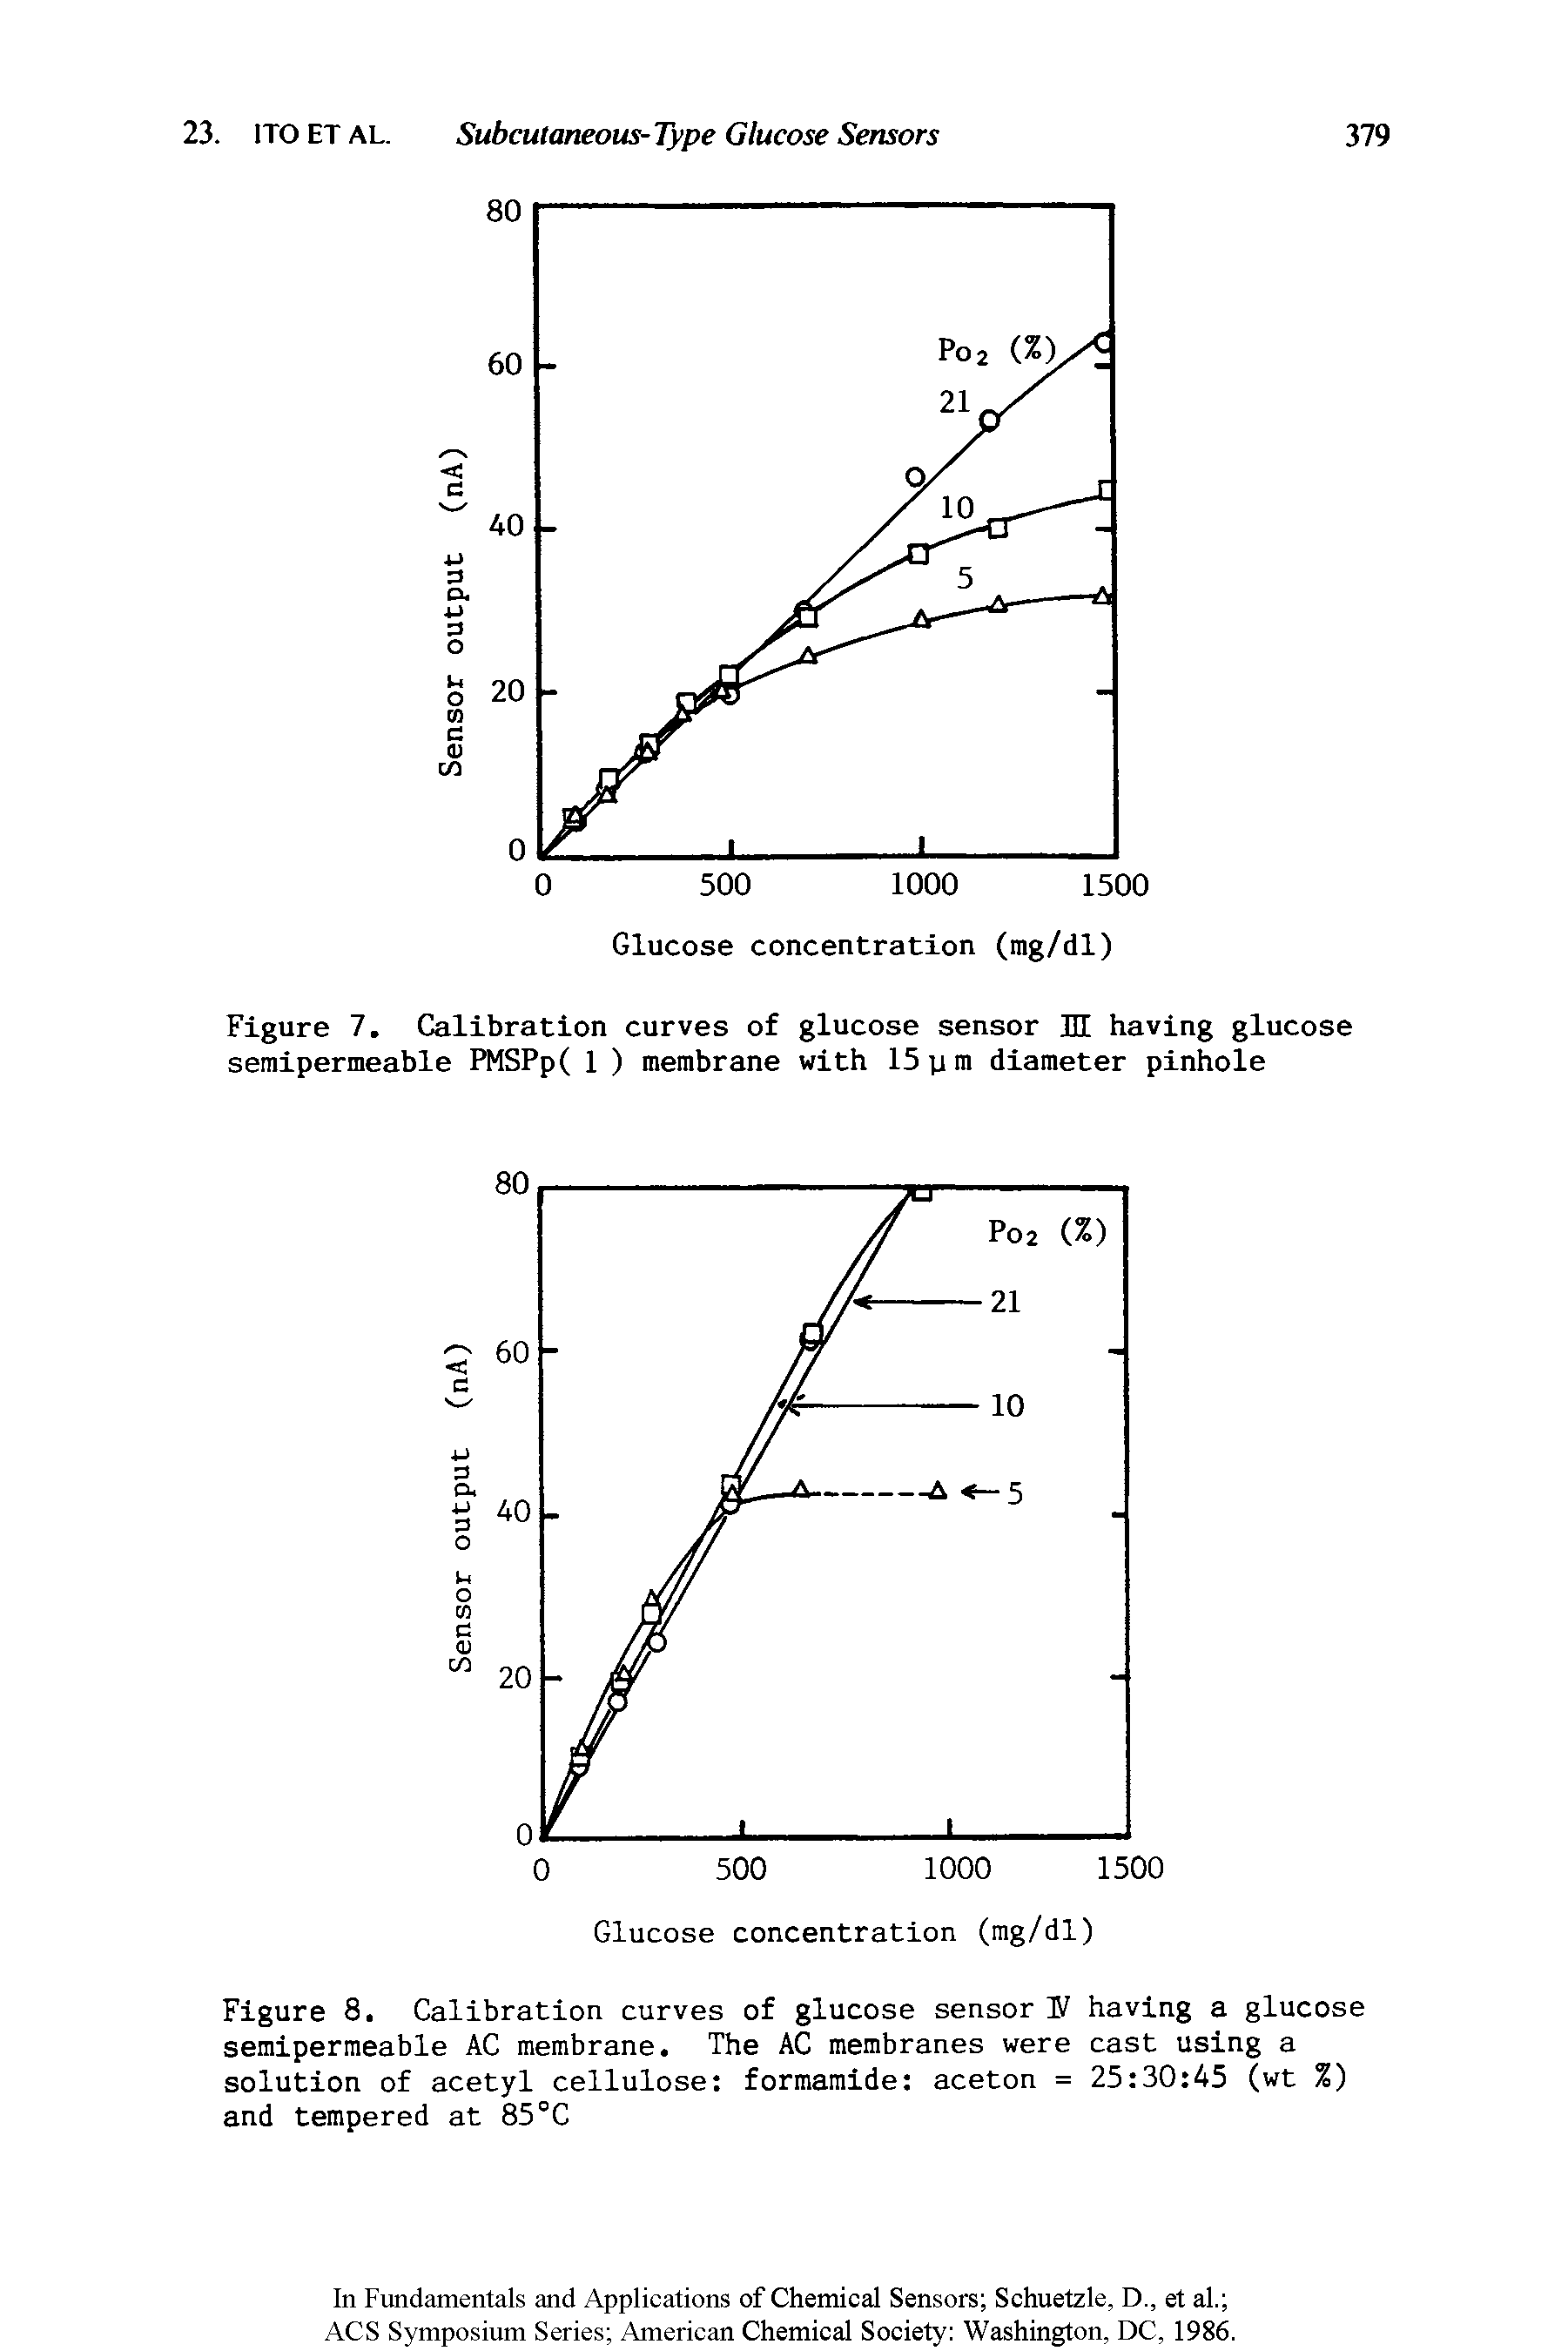 Figure 7. Calibration curves of glucose sensor HI having glucose seraipermeable PMSPp( 1 ) membrane with 15ym diameter pinhole...